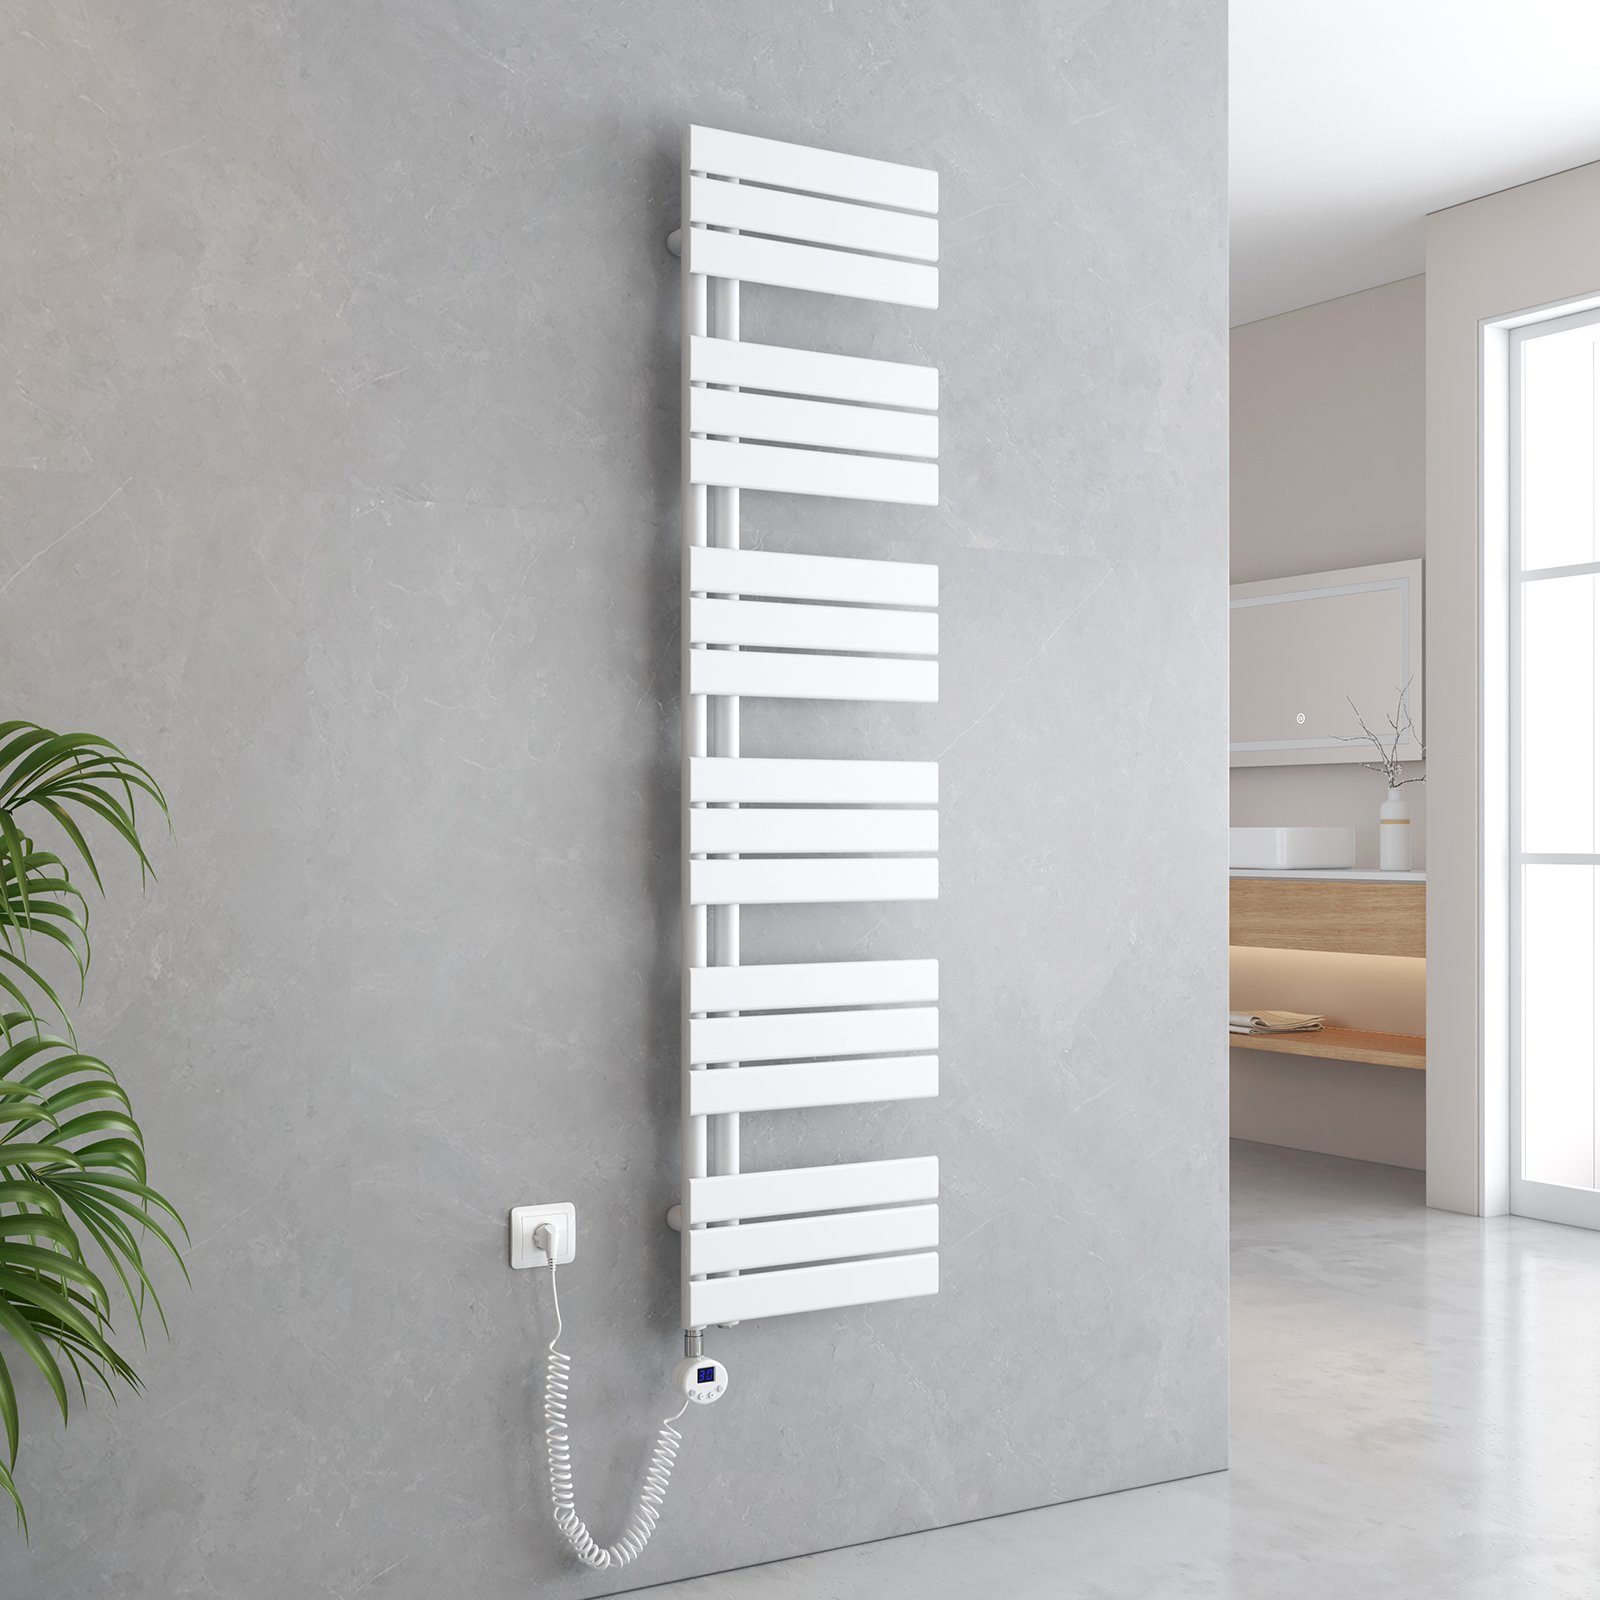 Heizstab Thermostat, Handtuchtrokner Panel inkl Elektrischer EMKE timer Paneelheizkörper mit mit Handtuchwärmer Handtuchhalter